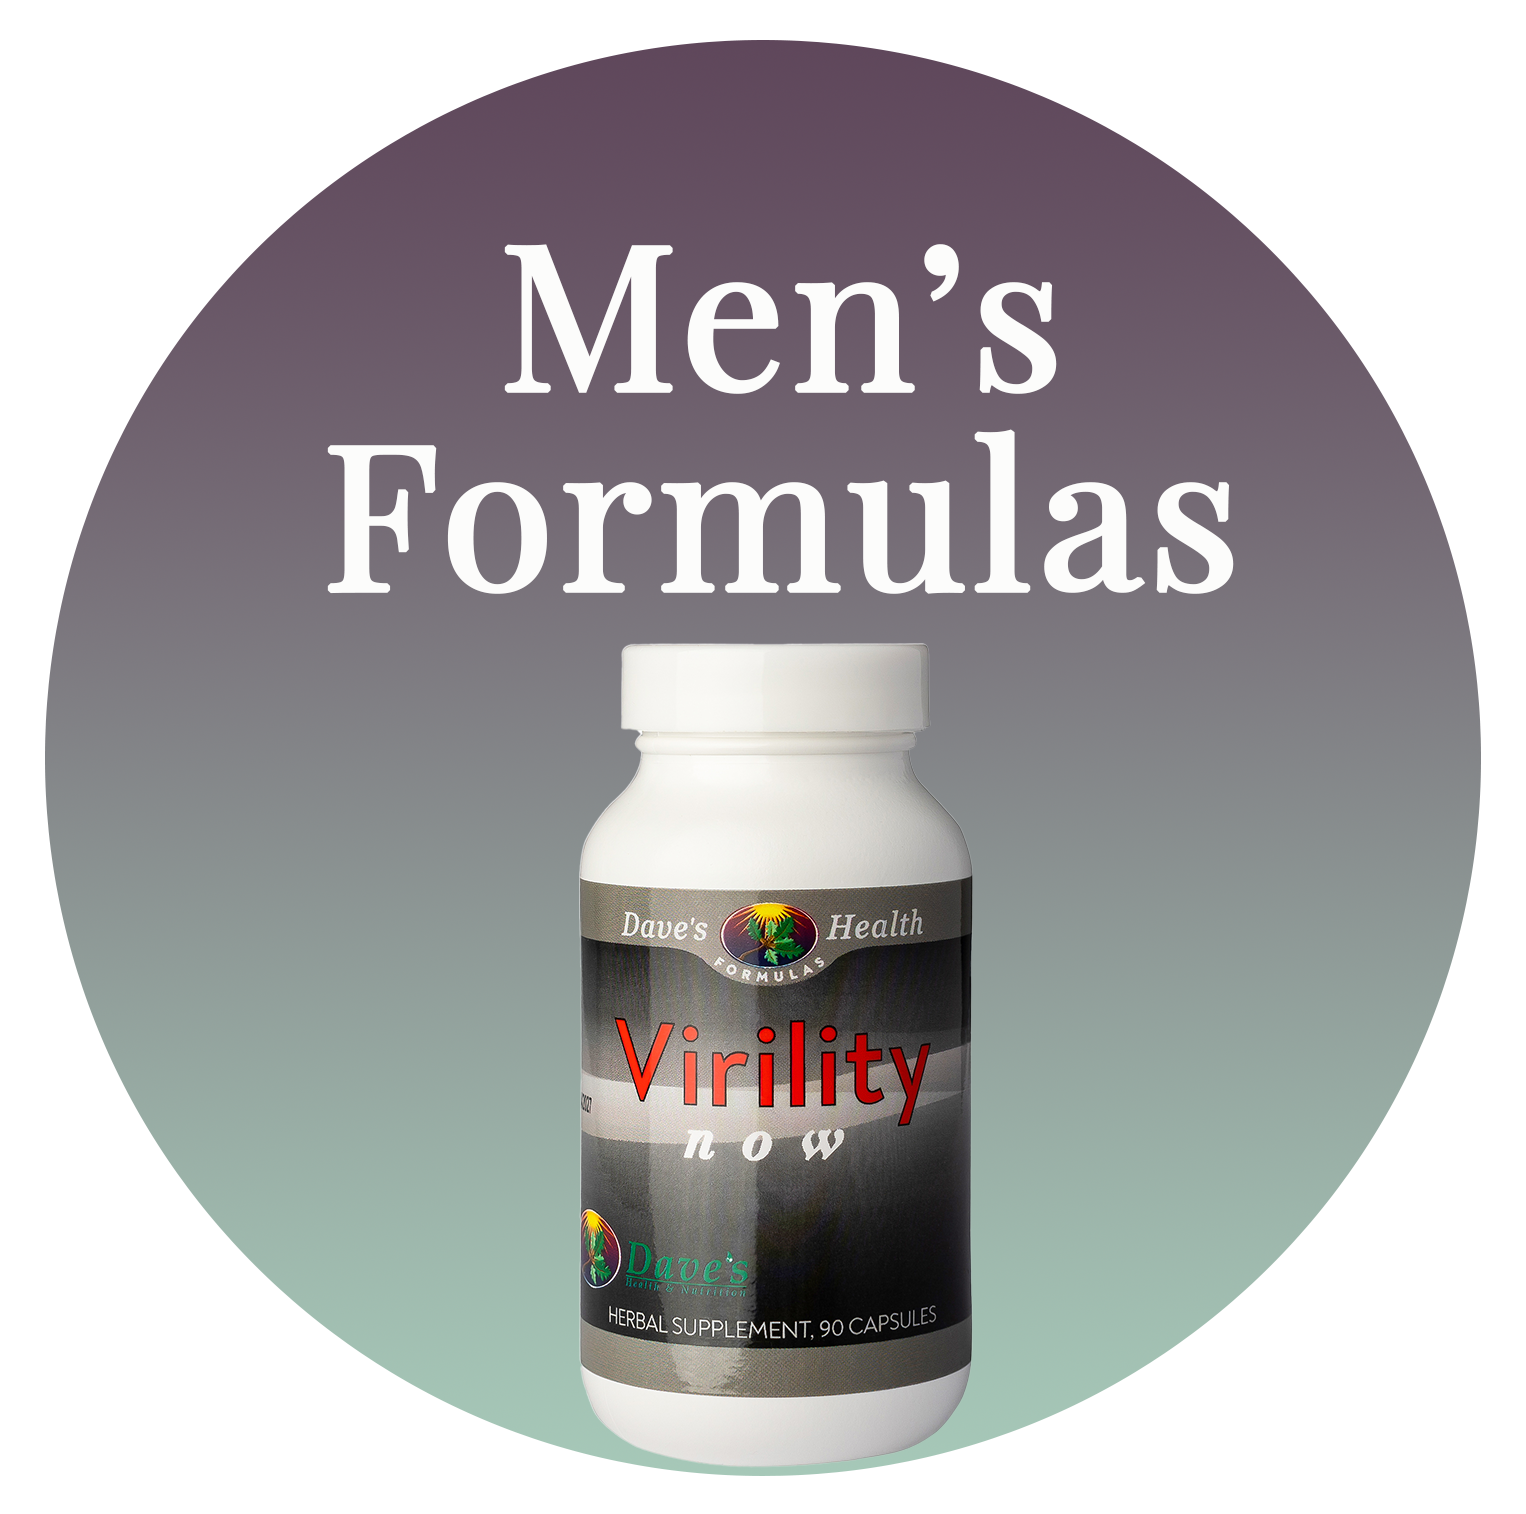 Men's Formulas